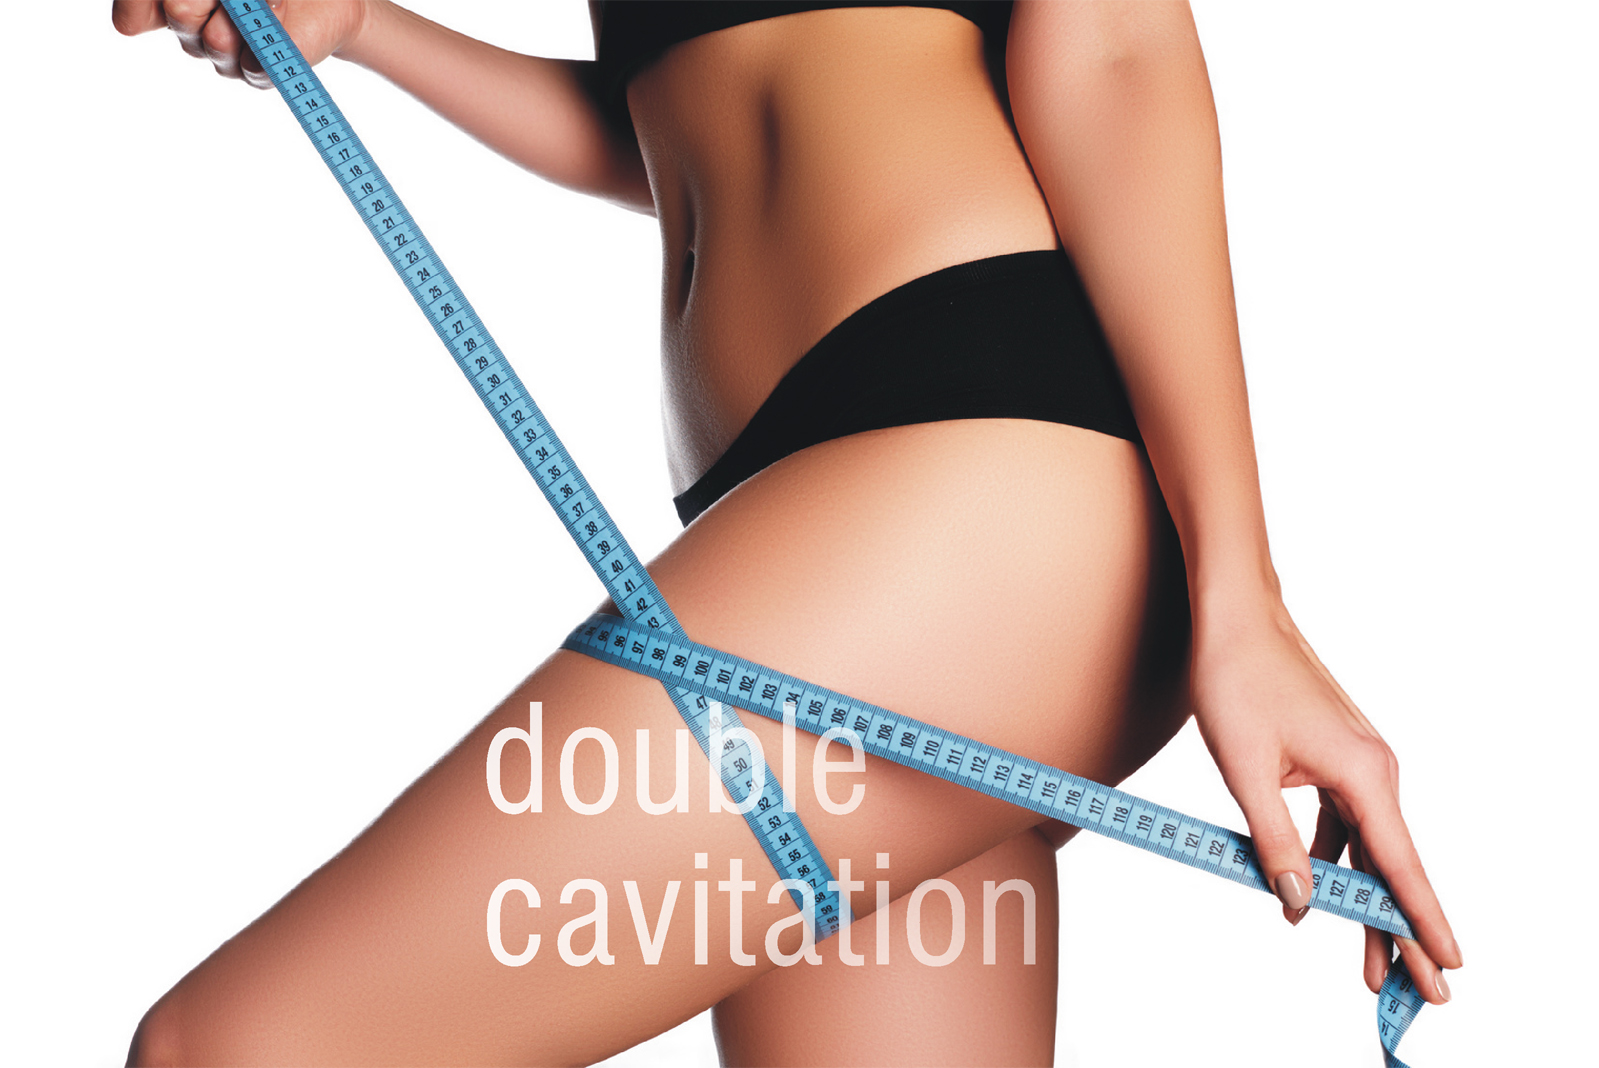 Double Cavitation  treatment for treating skin looseness